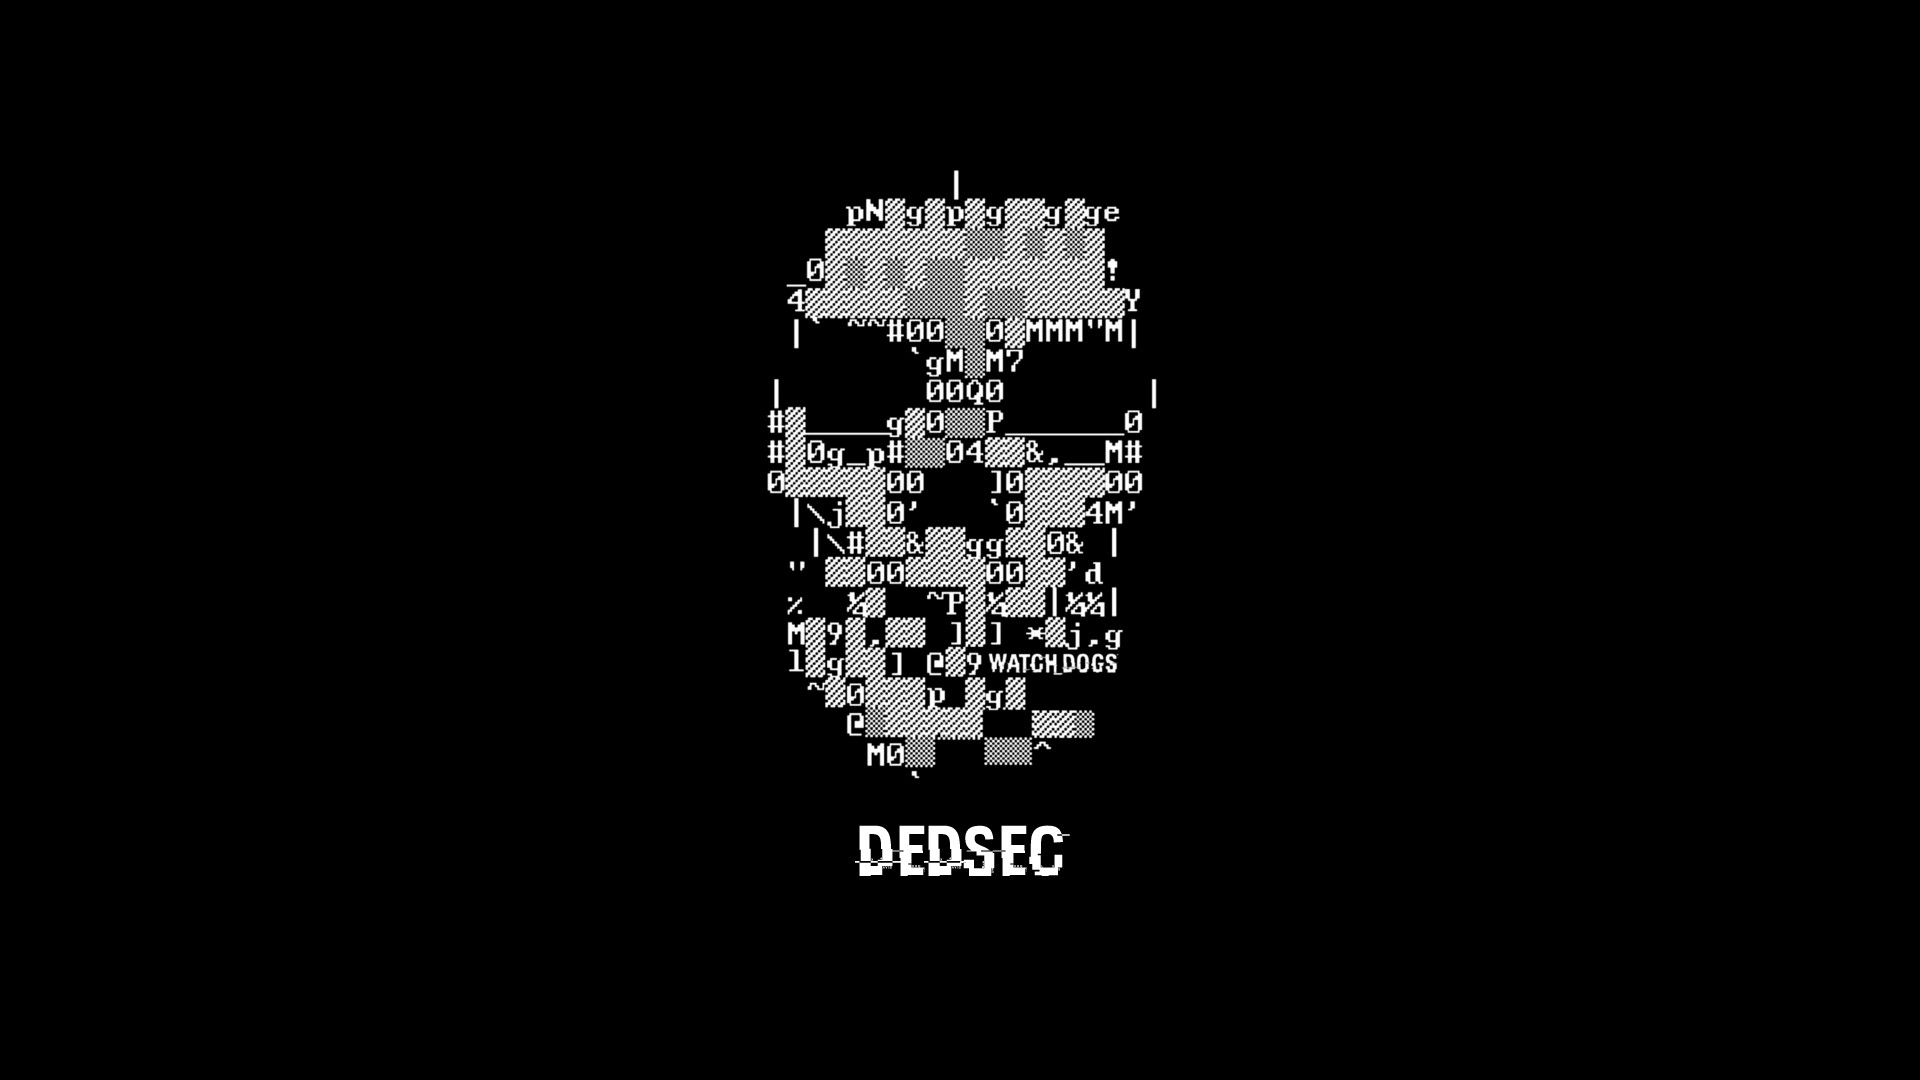 DEDSEC, Watch Dogs, Dark, Hacking Wallpapers HD / Desktop and Mobile